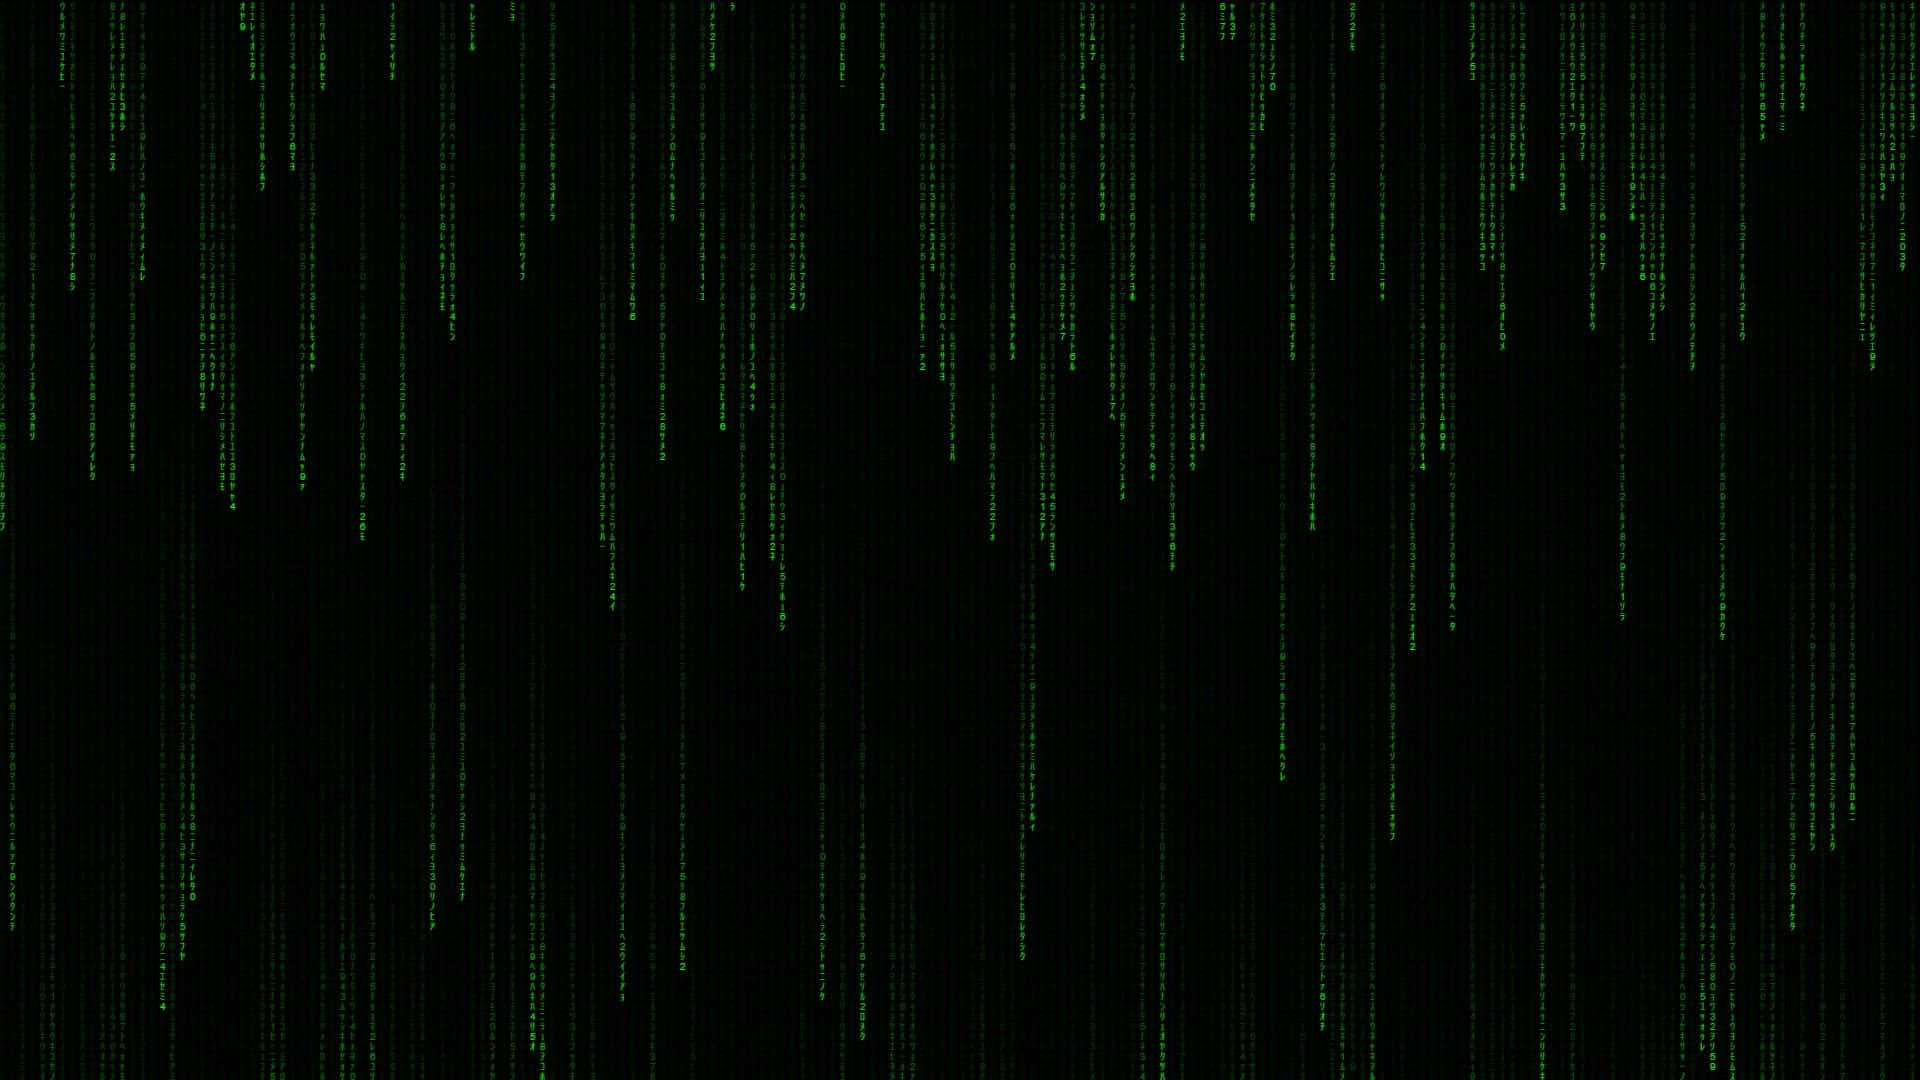 Cyberpunk Landscape of the Matrix